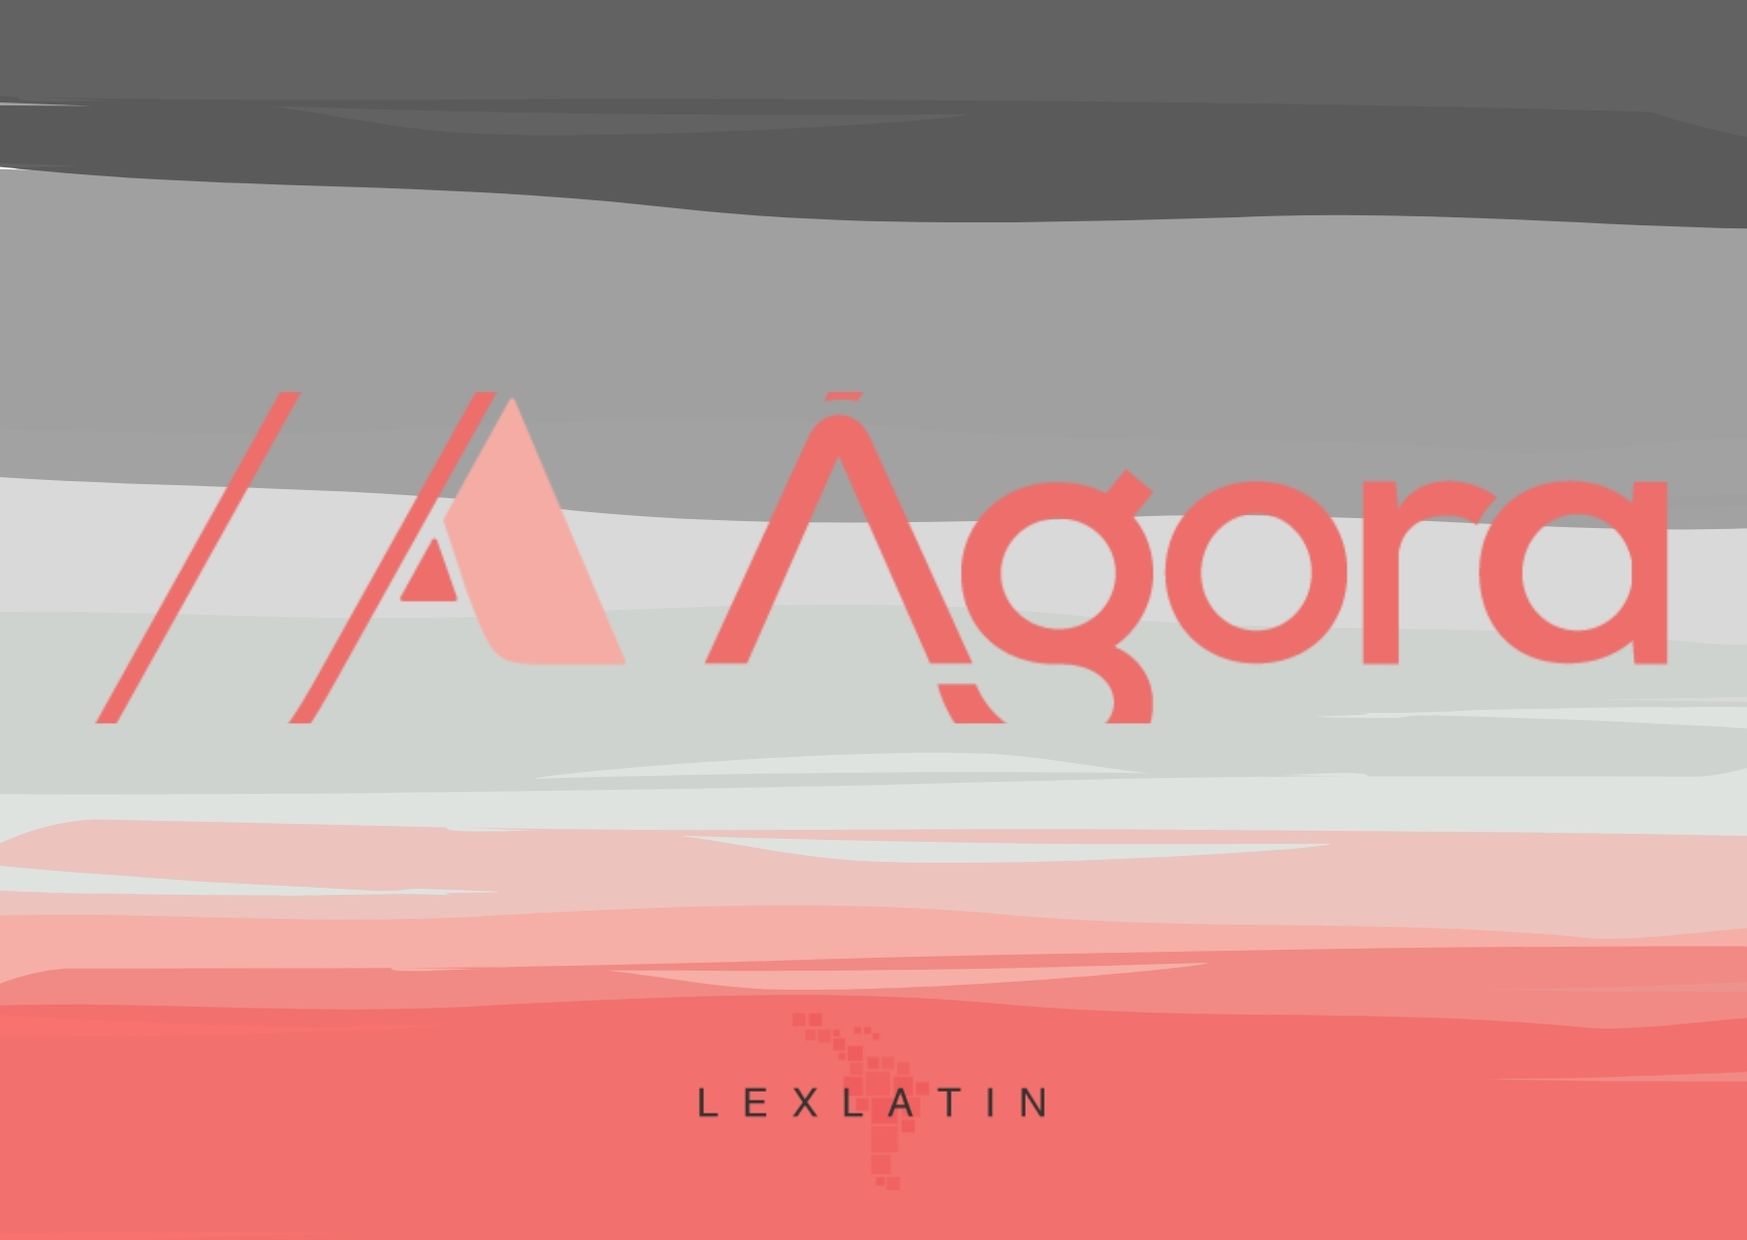 O futuro de Ágora está carregado de novas funcionalidades e outros mecanismos para complementar a ferramenta